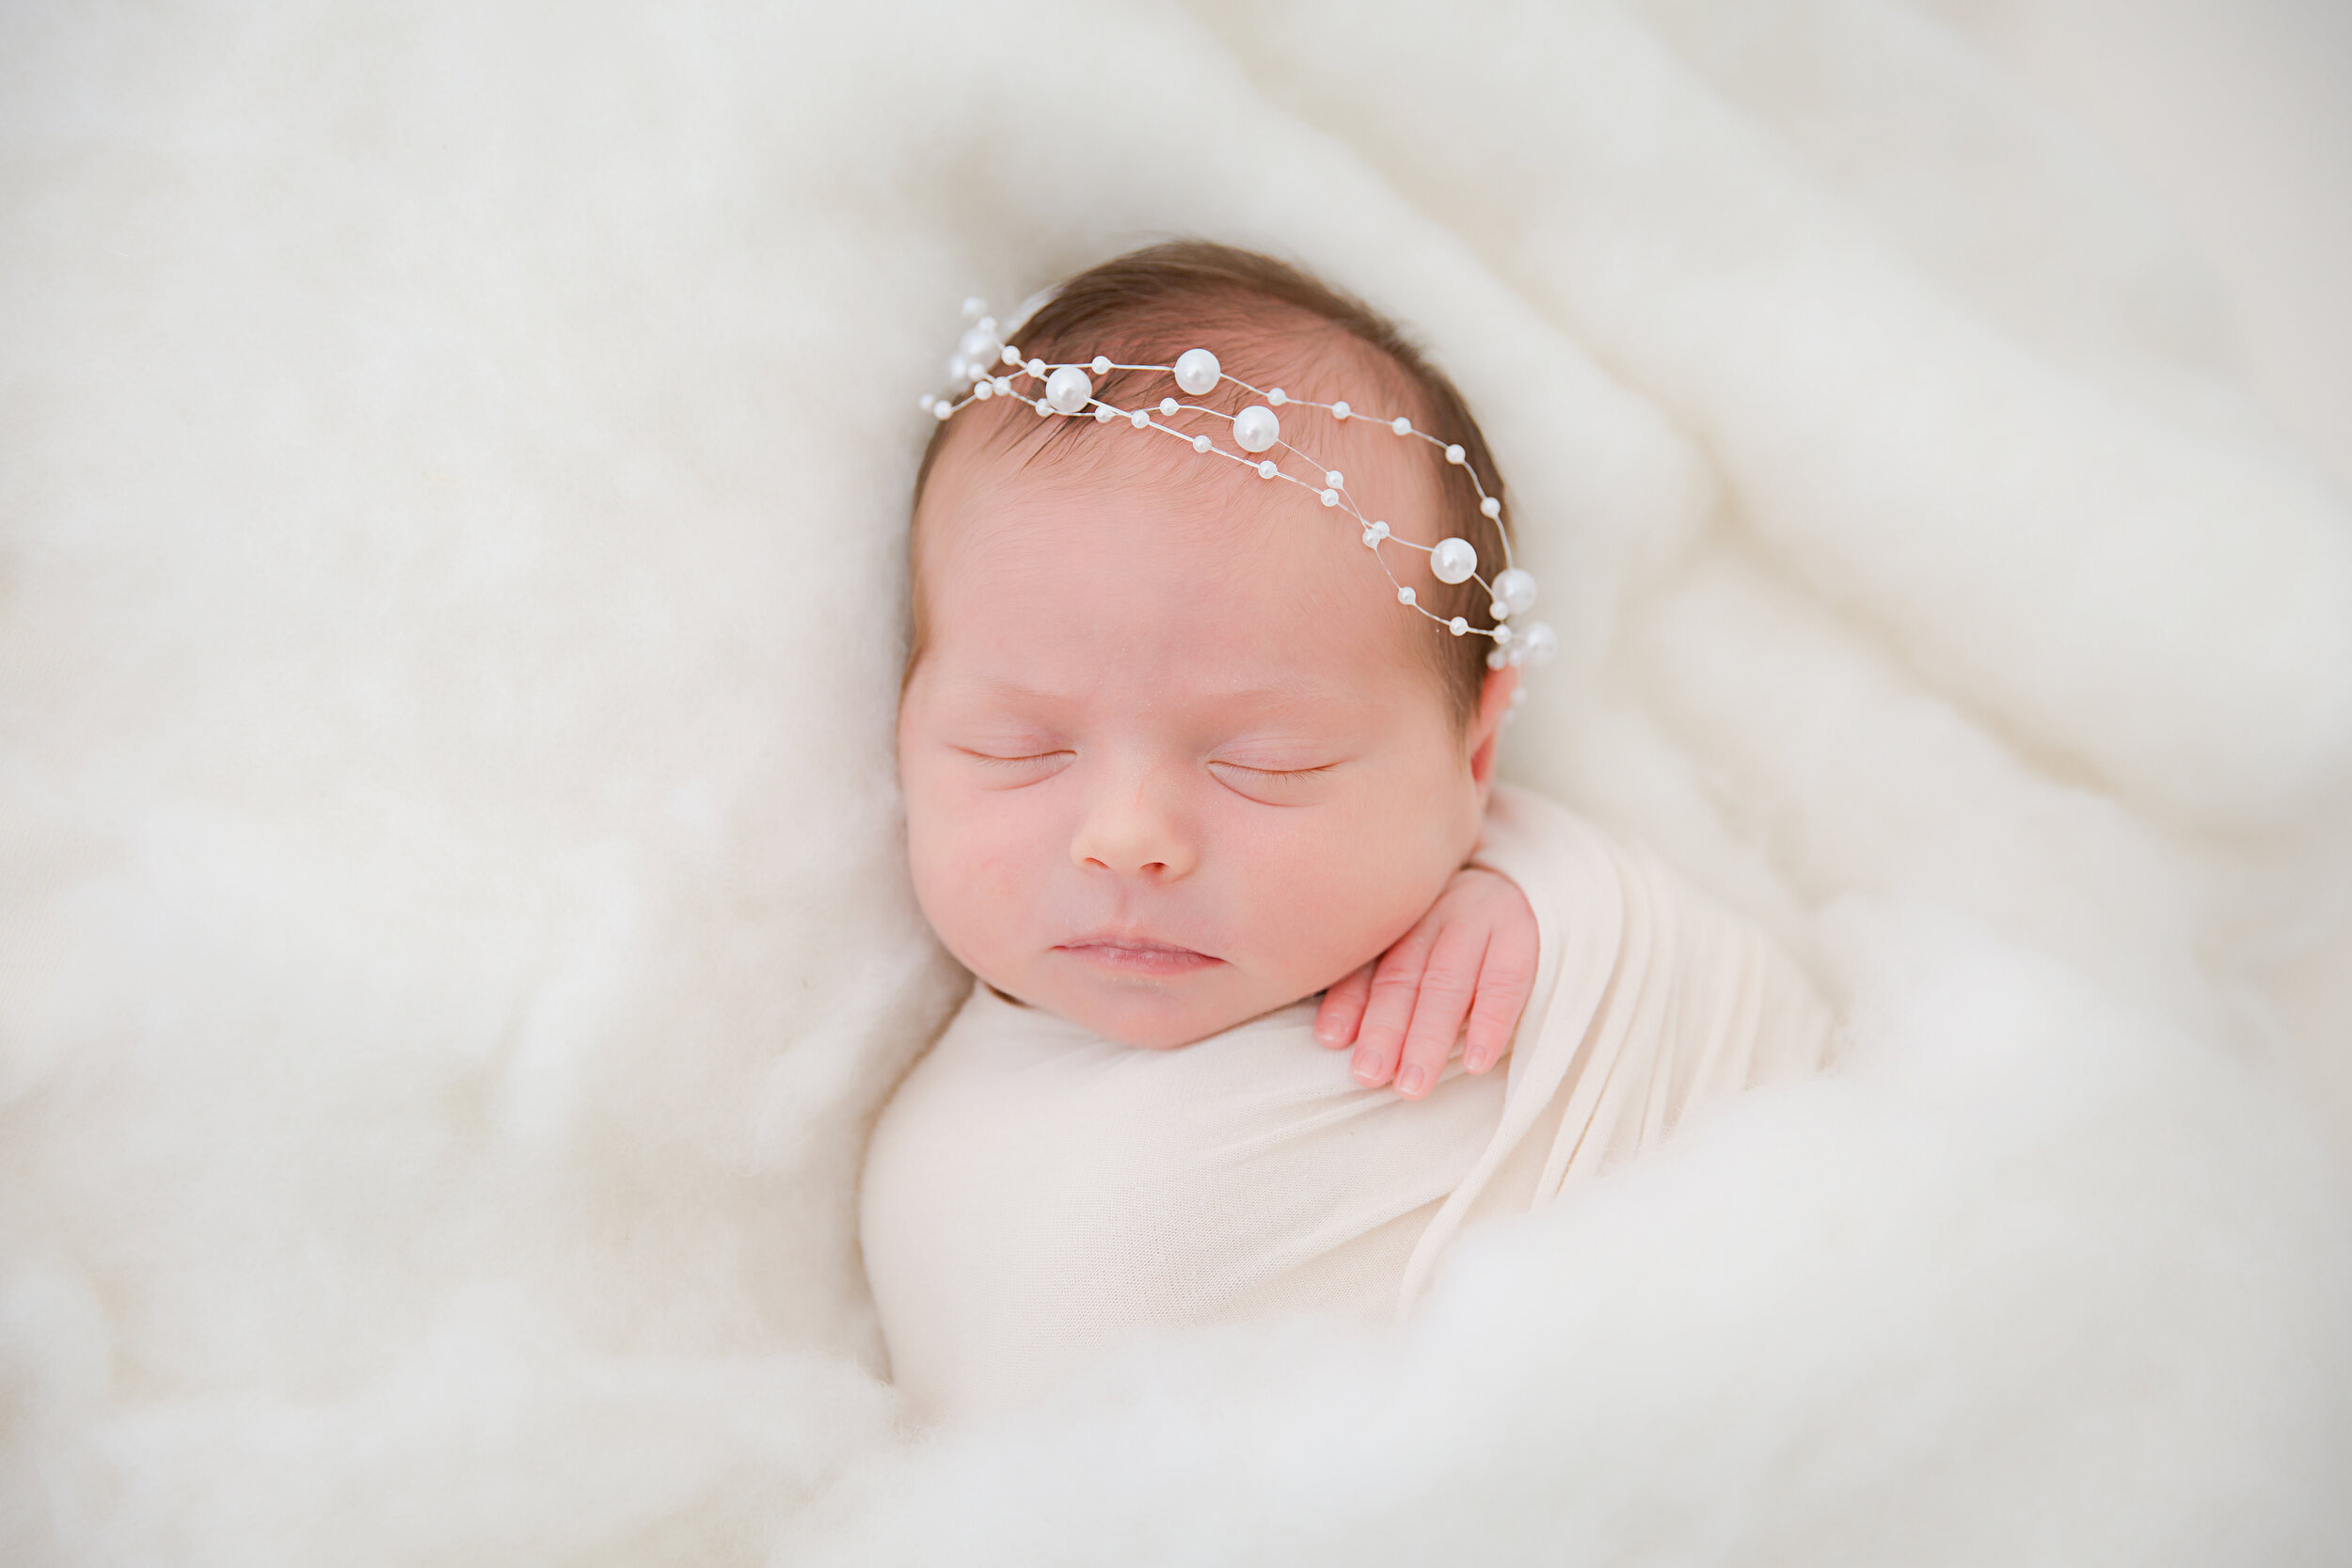 posed-newborn-baby-girl-sleeping-wearing-halo